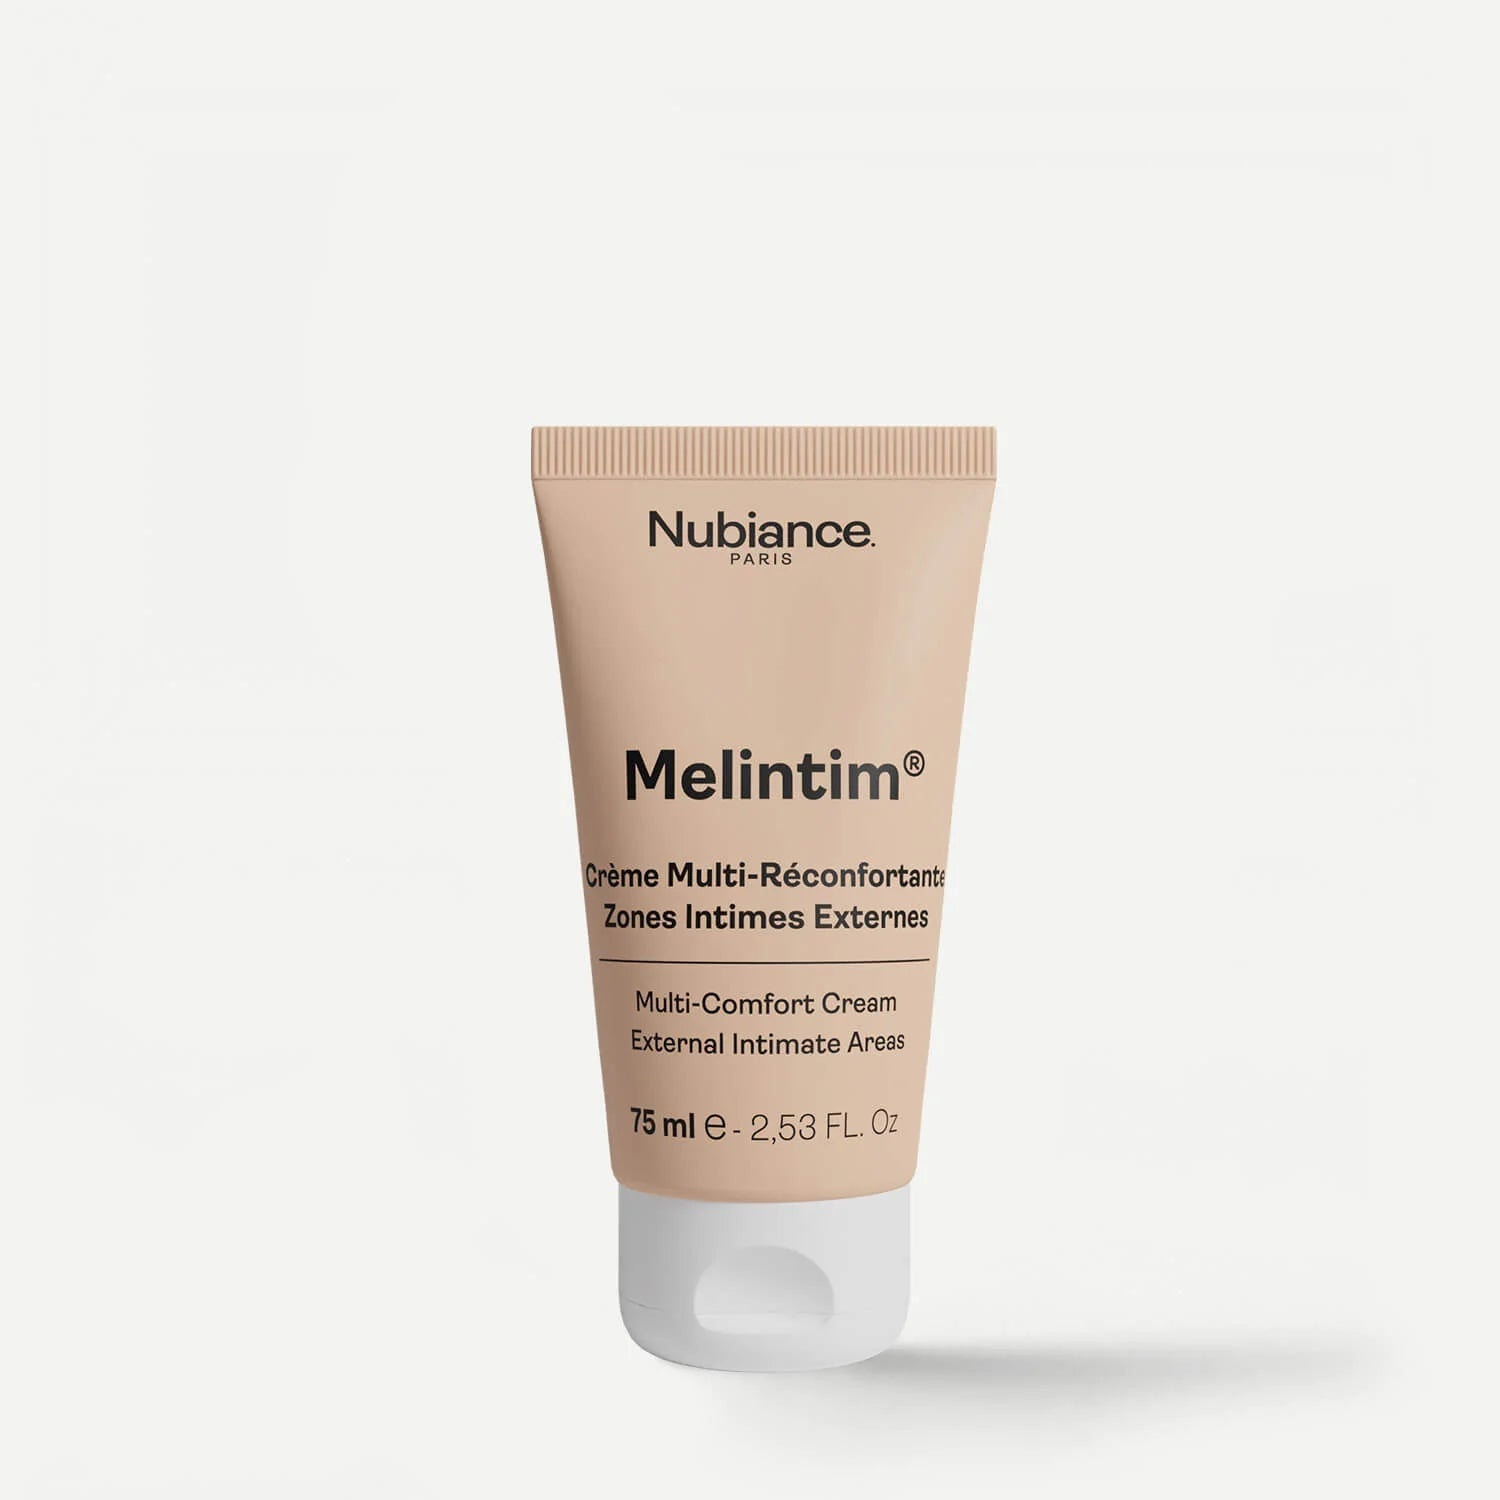 Buy NUBIANCE Melintim Multi-Comforting Cream for External Intimate Areas in Nigeria